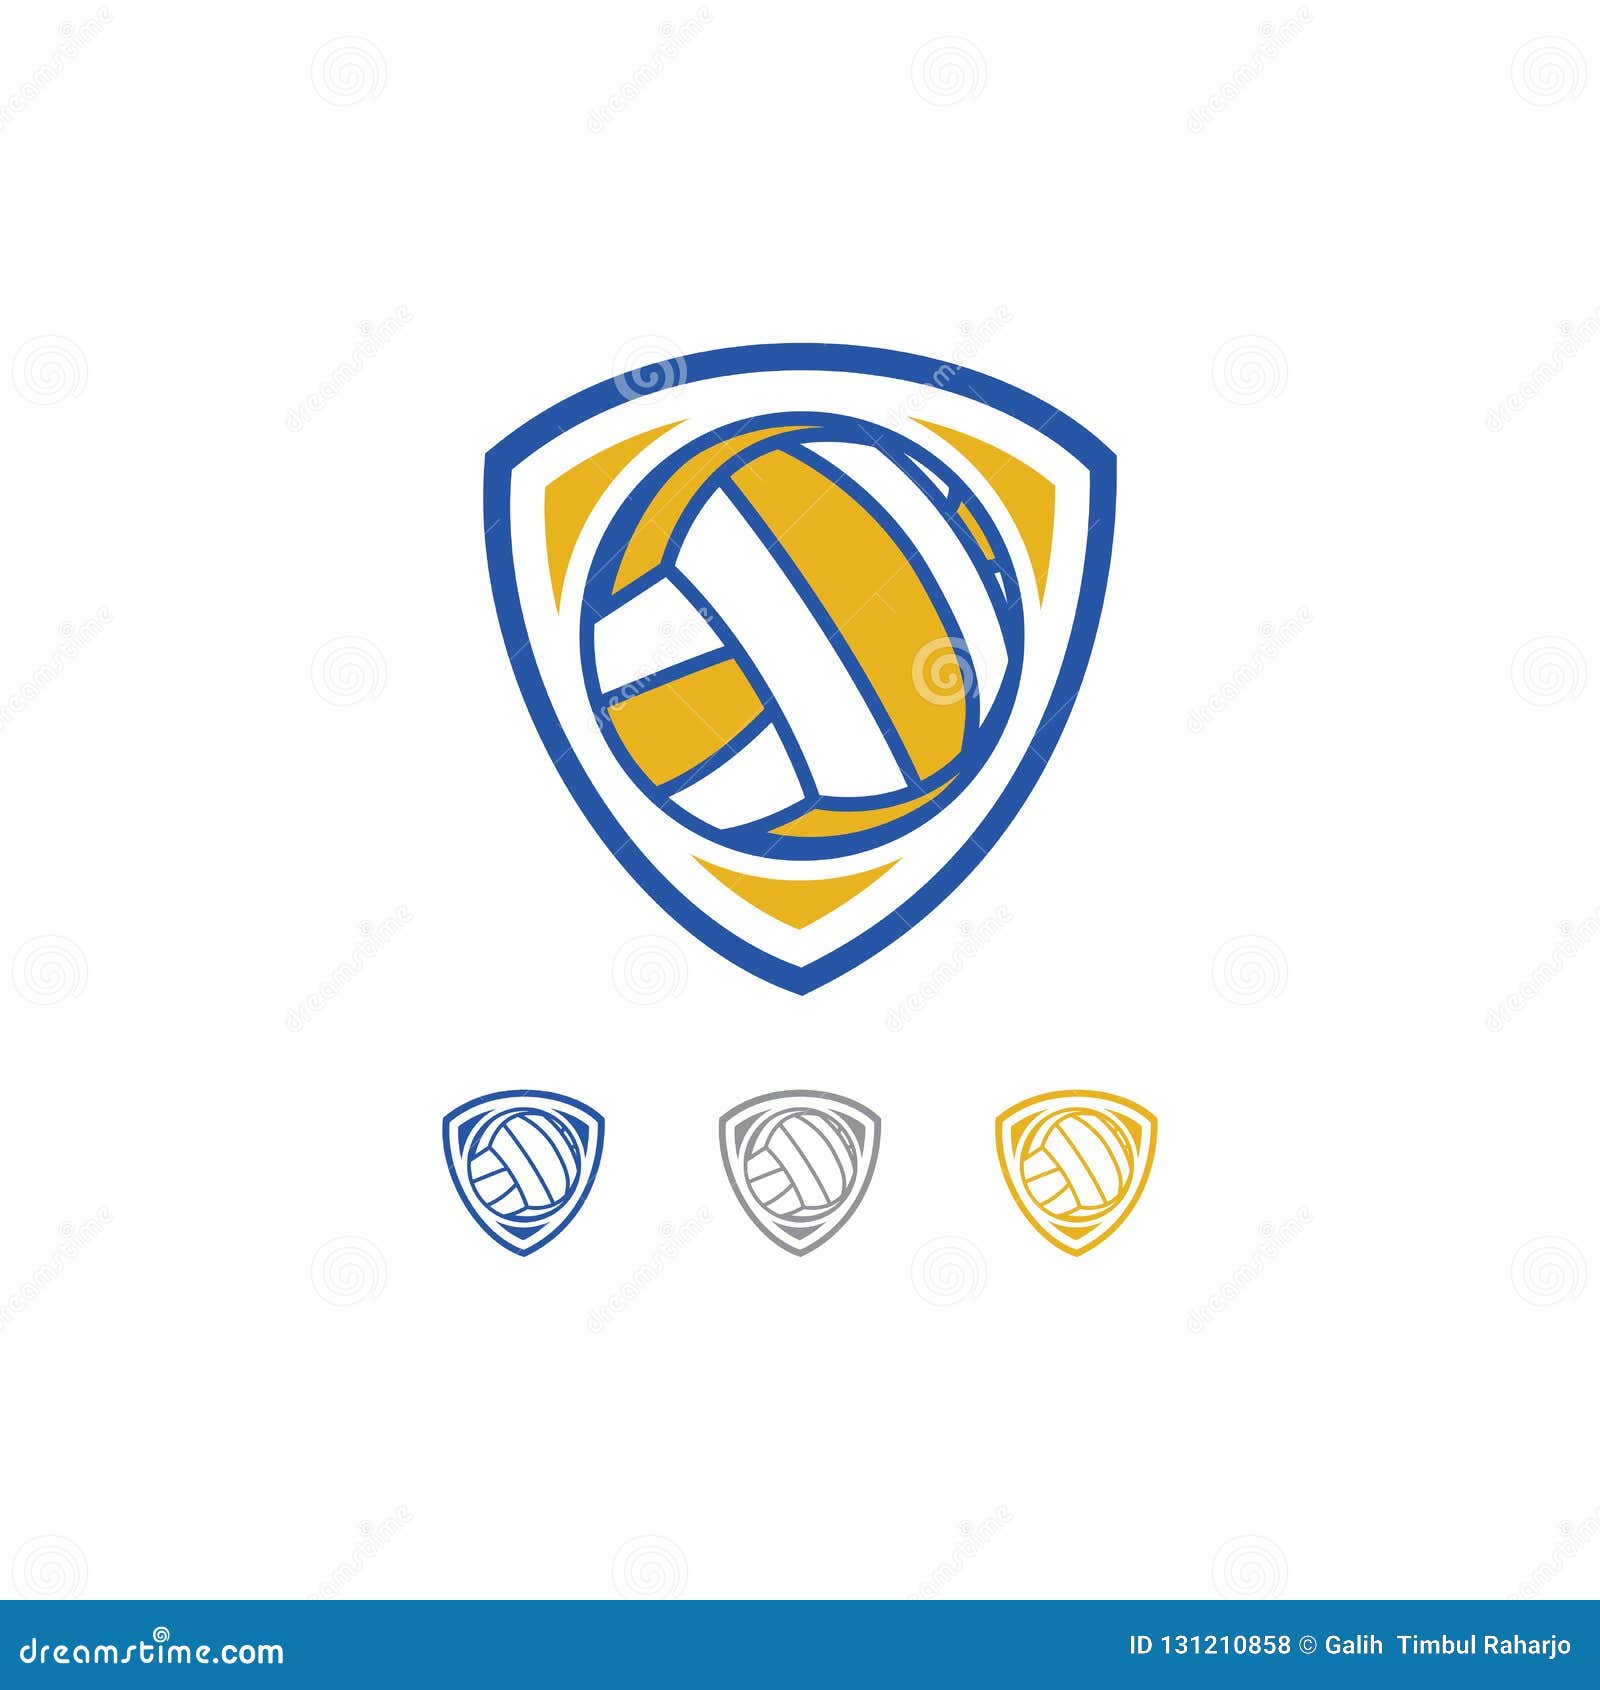 Download Volleyball Team Logo Design Stock Illustration ...